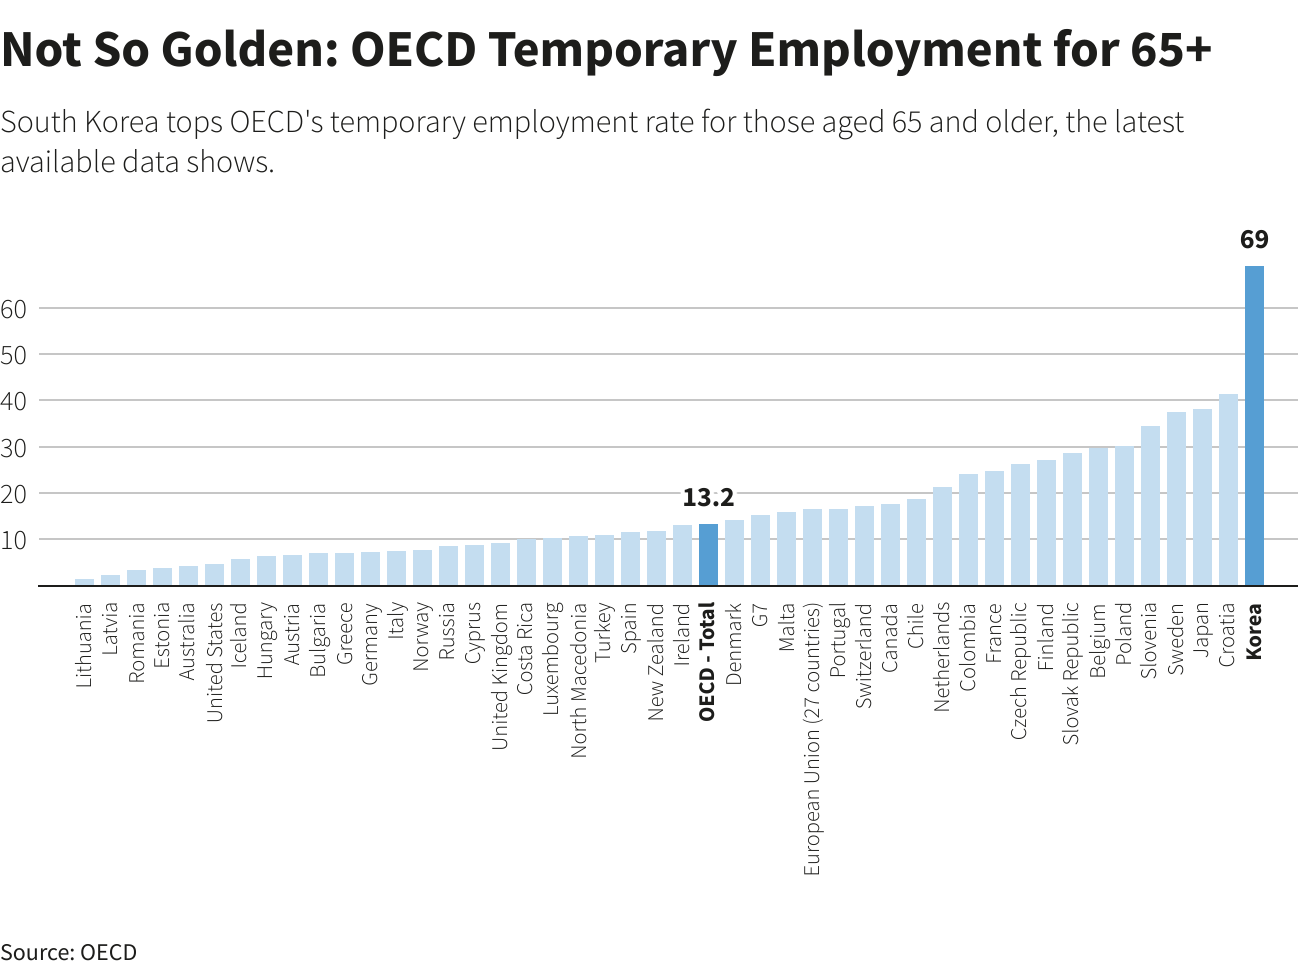 Not So Golden: OECD Temporary Employment for 65+